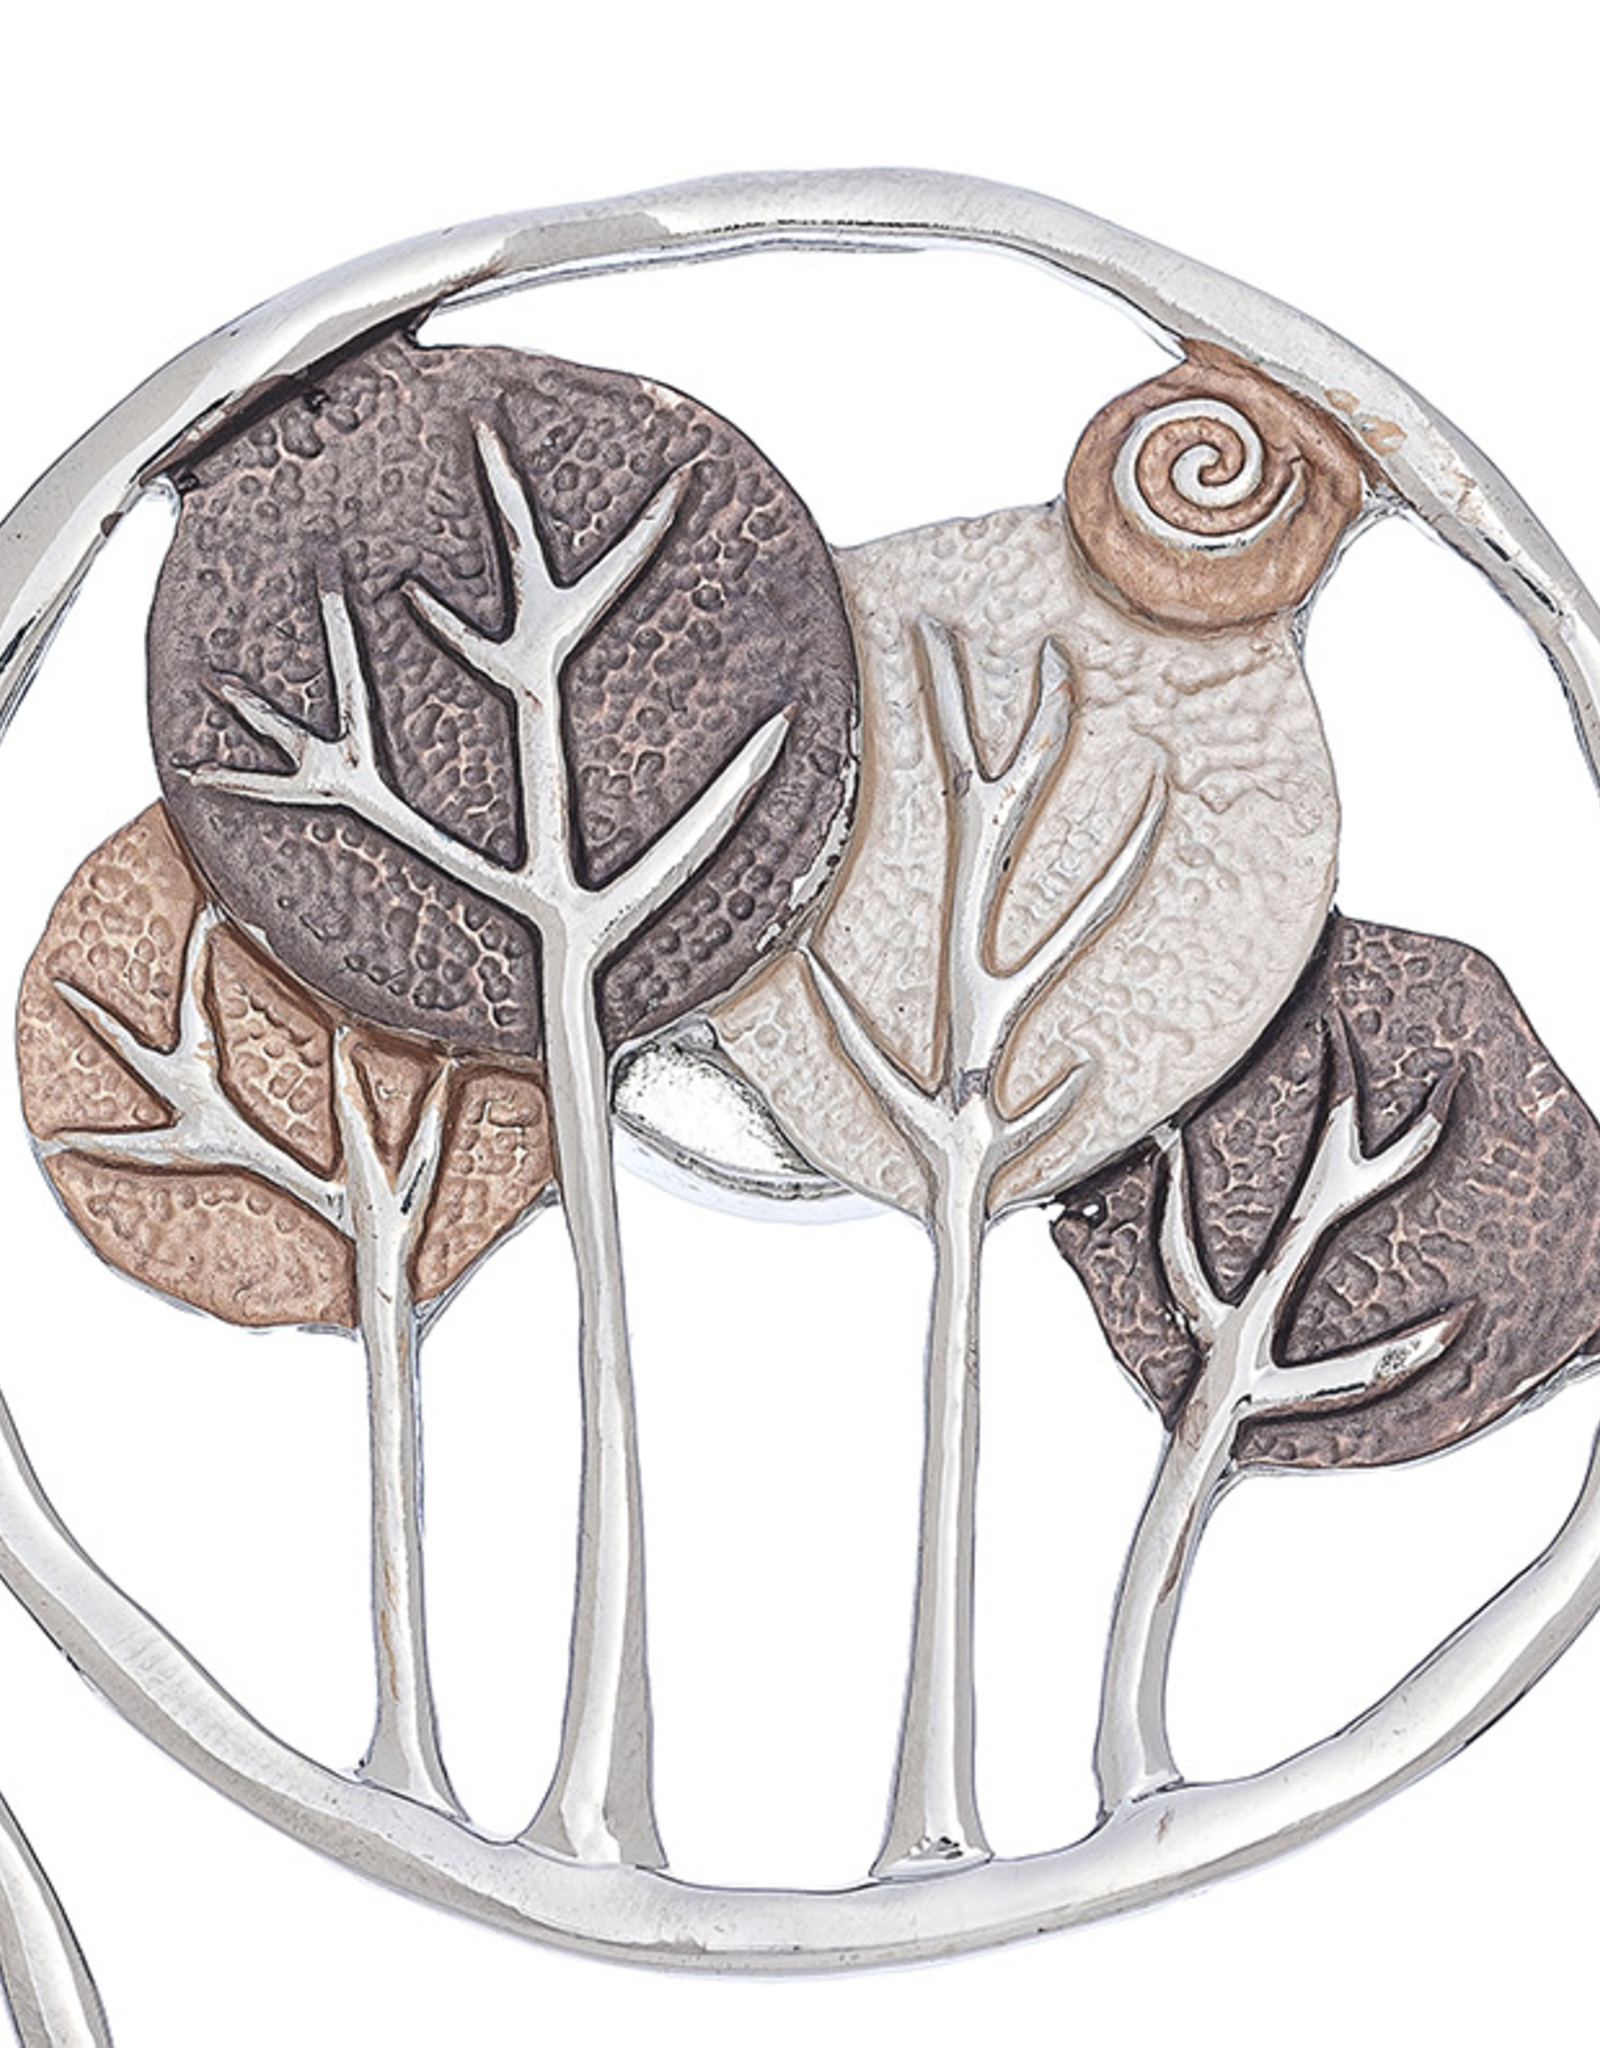 Magnetic Brooch Circle Tree Design brown/tan - Garden Diva Design Studio LLC